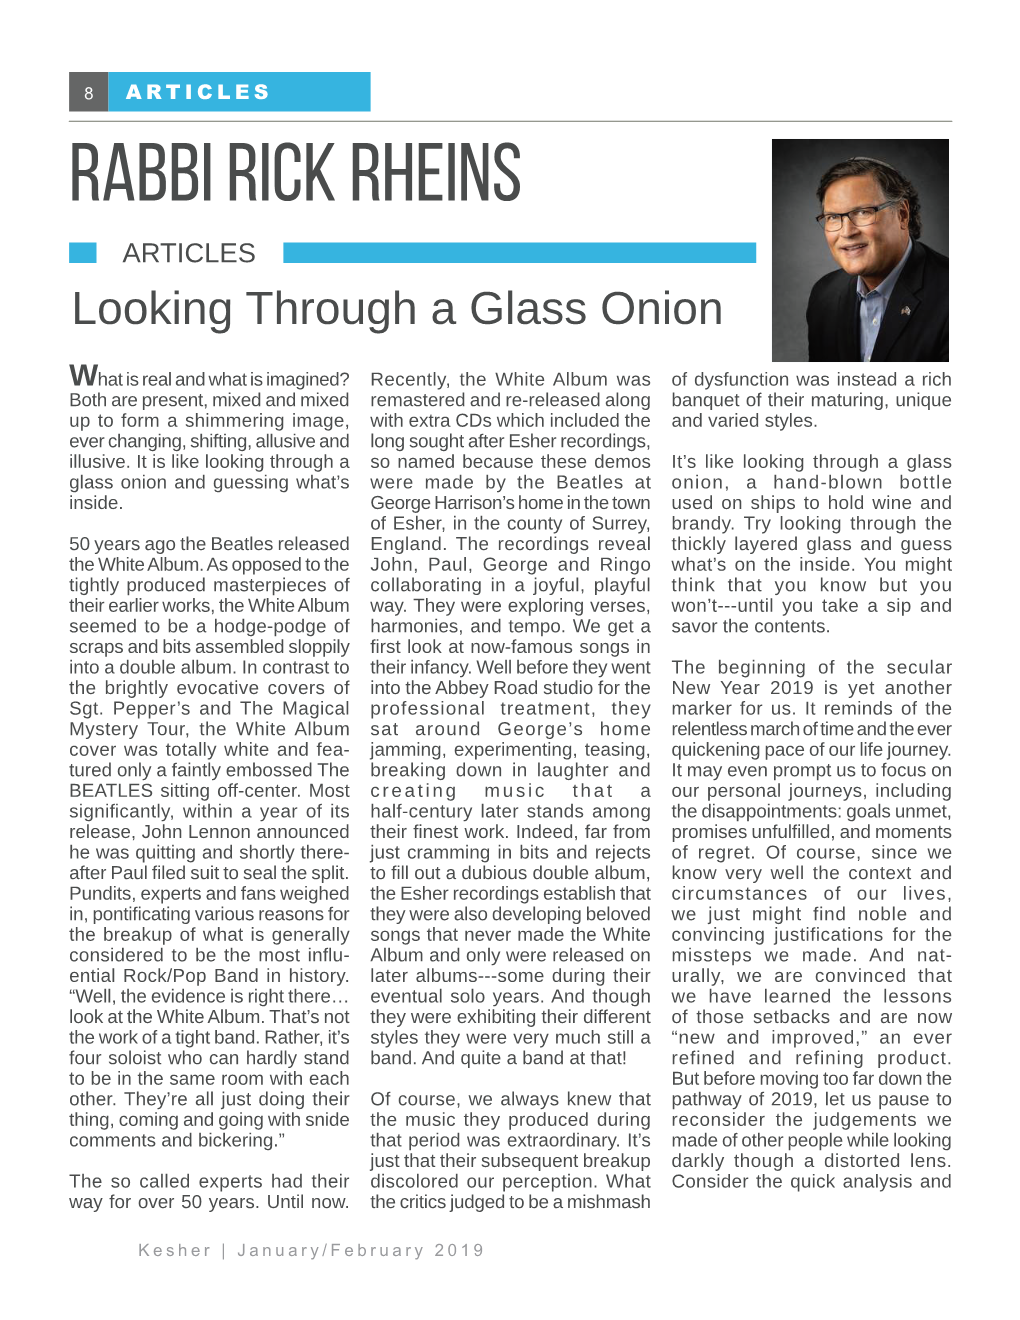 Rabbi Rick Rheins